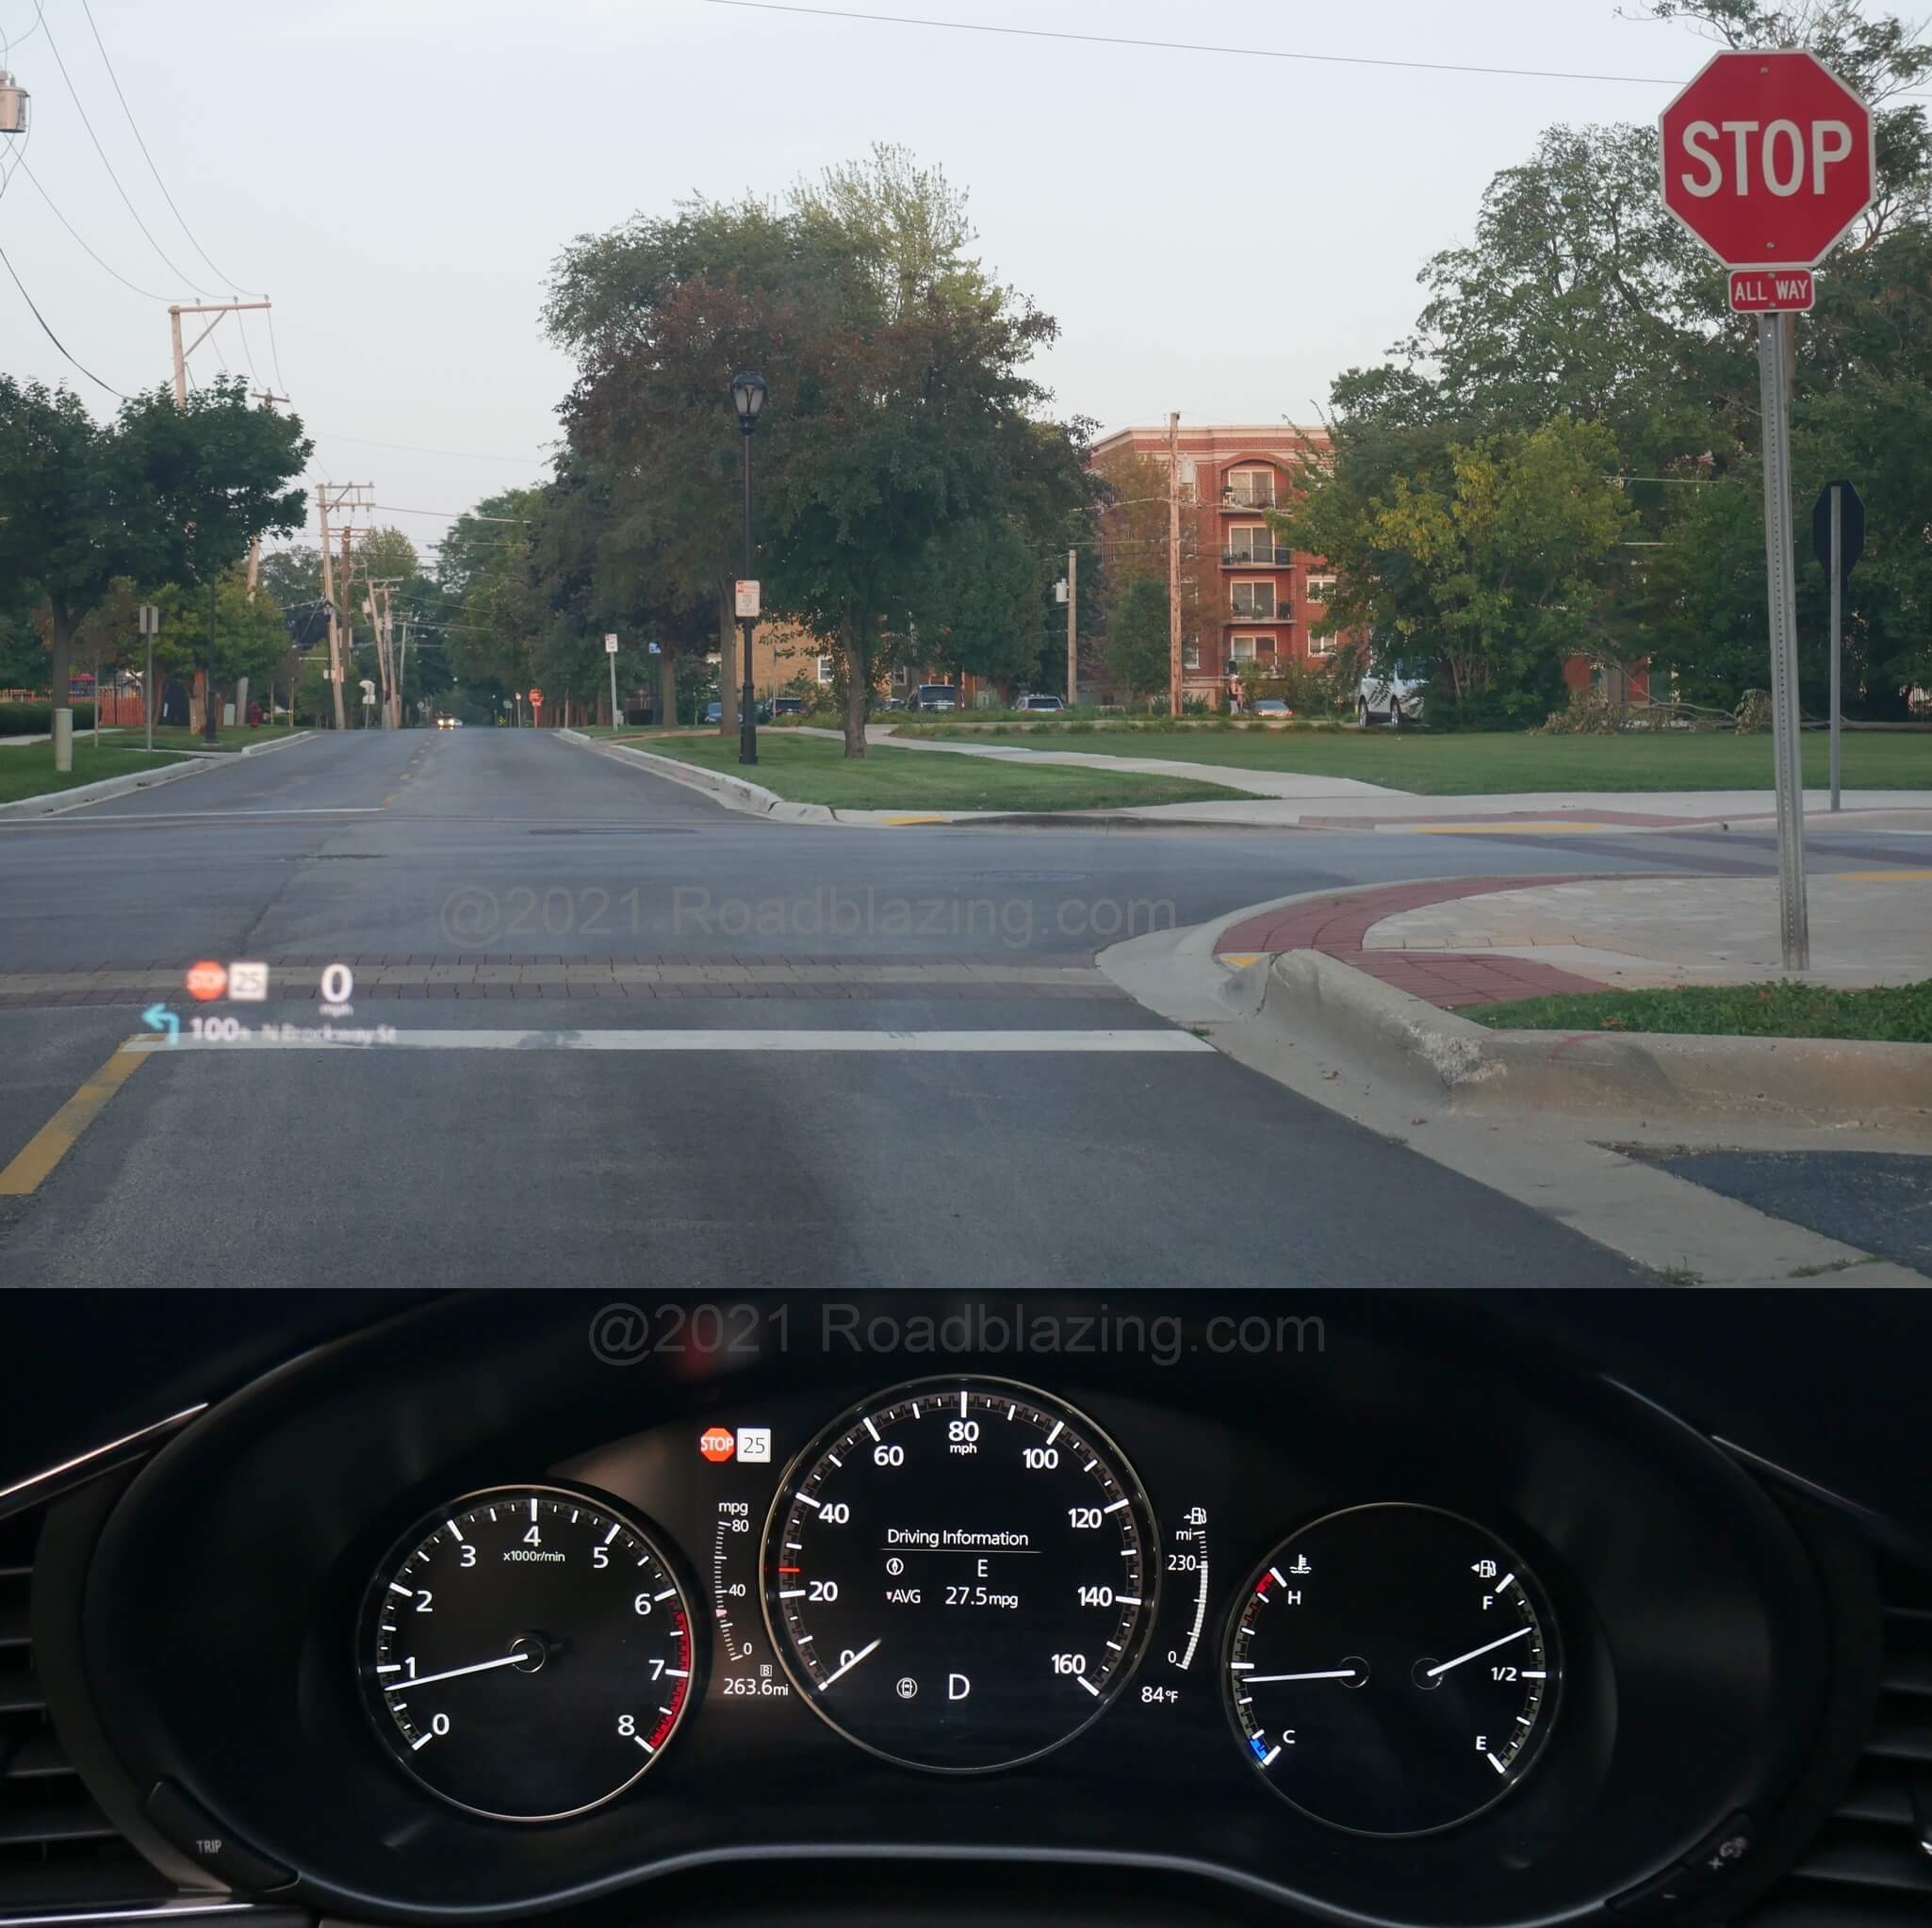 2021 Mazda 3 2.5 Turbo Hatchback: Premium Plus trim includes HUD display and traffic sign recognition